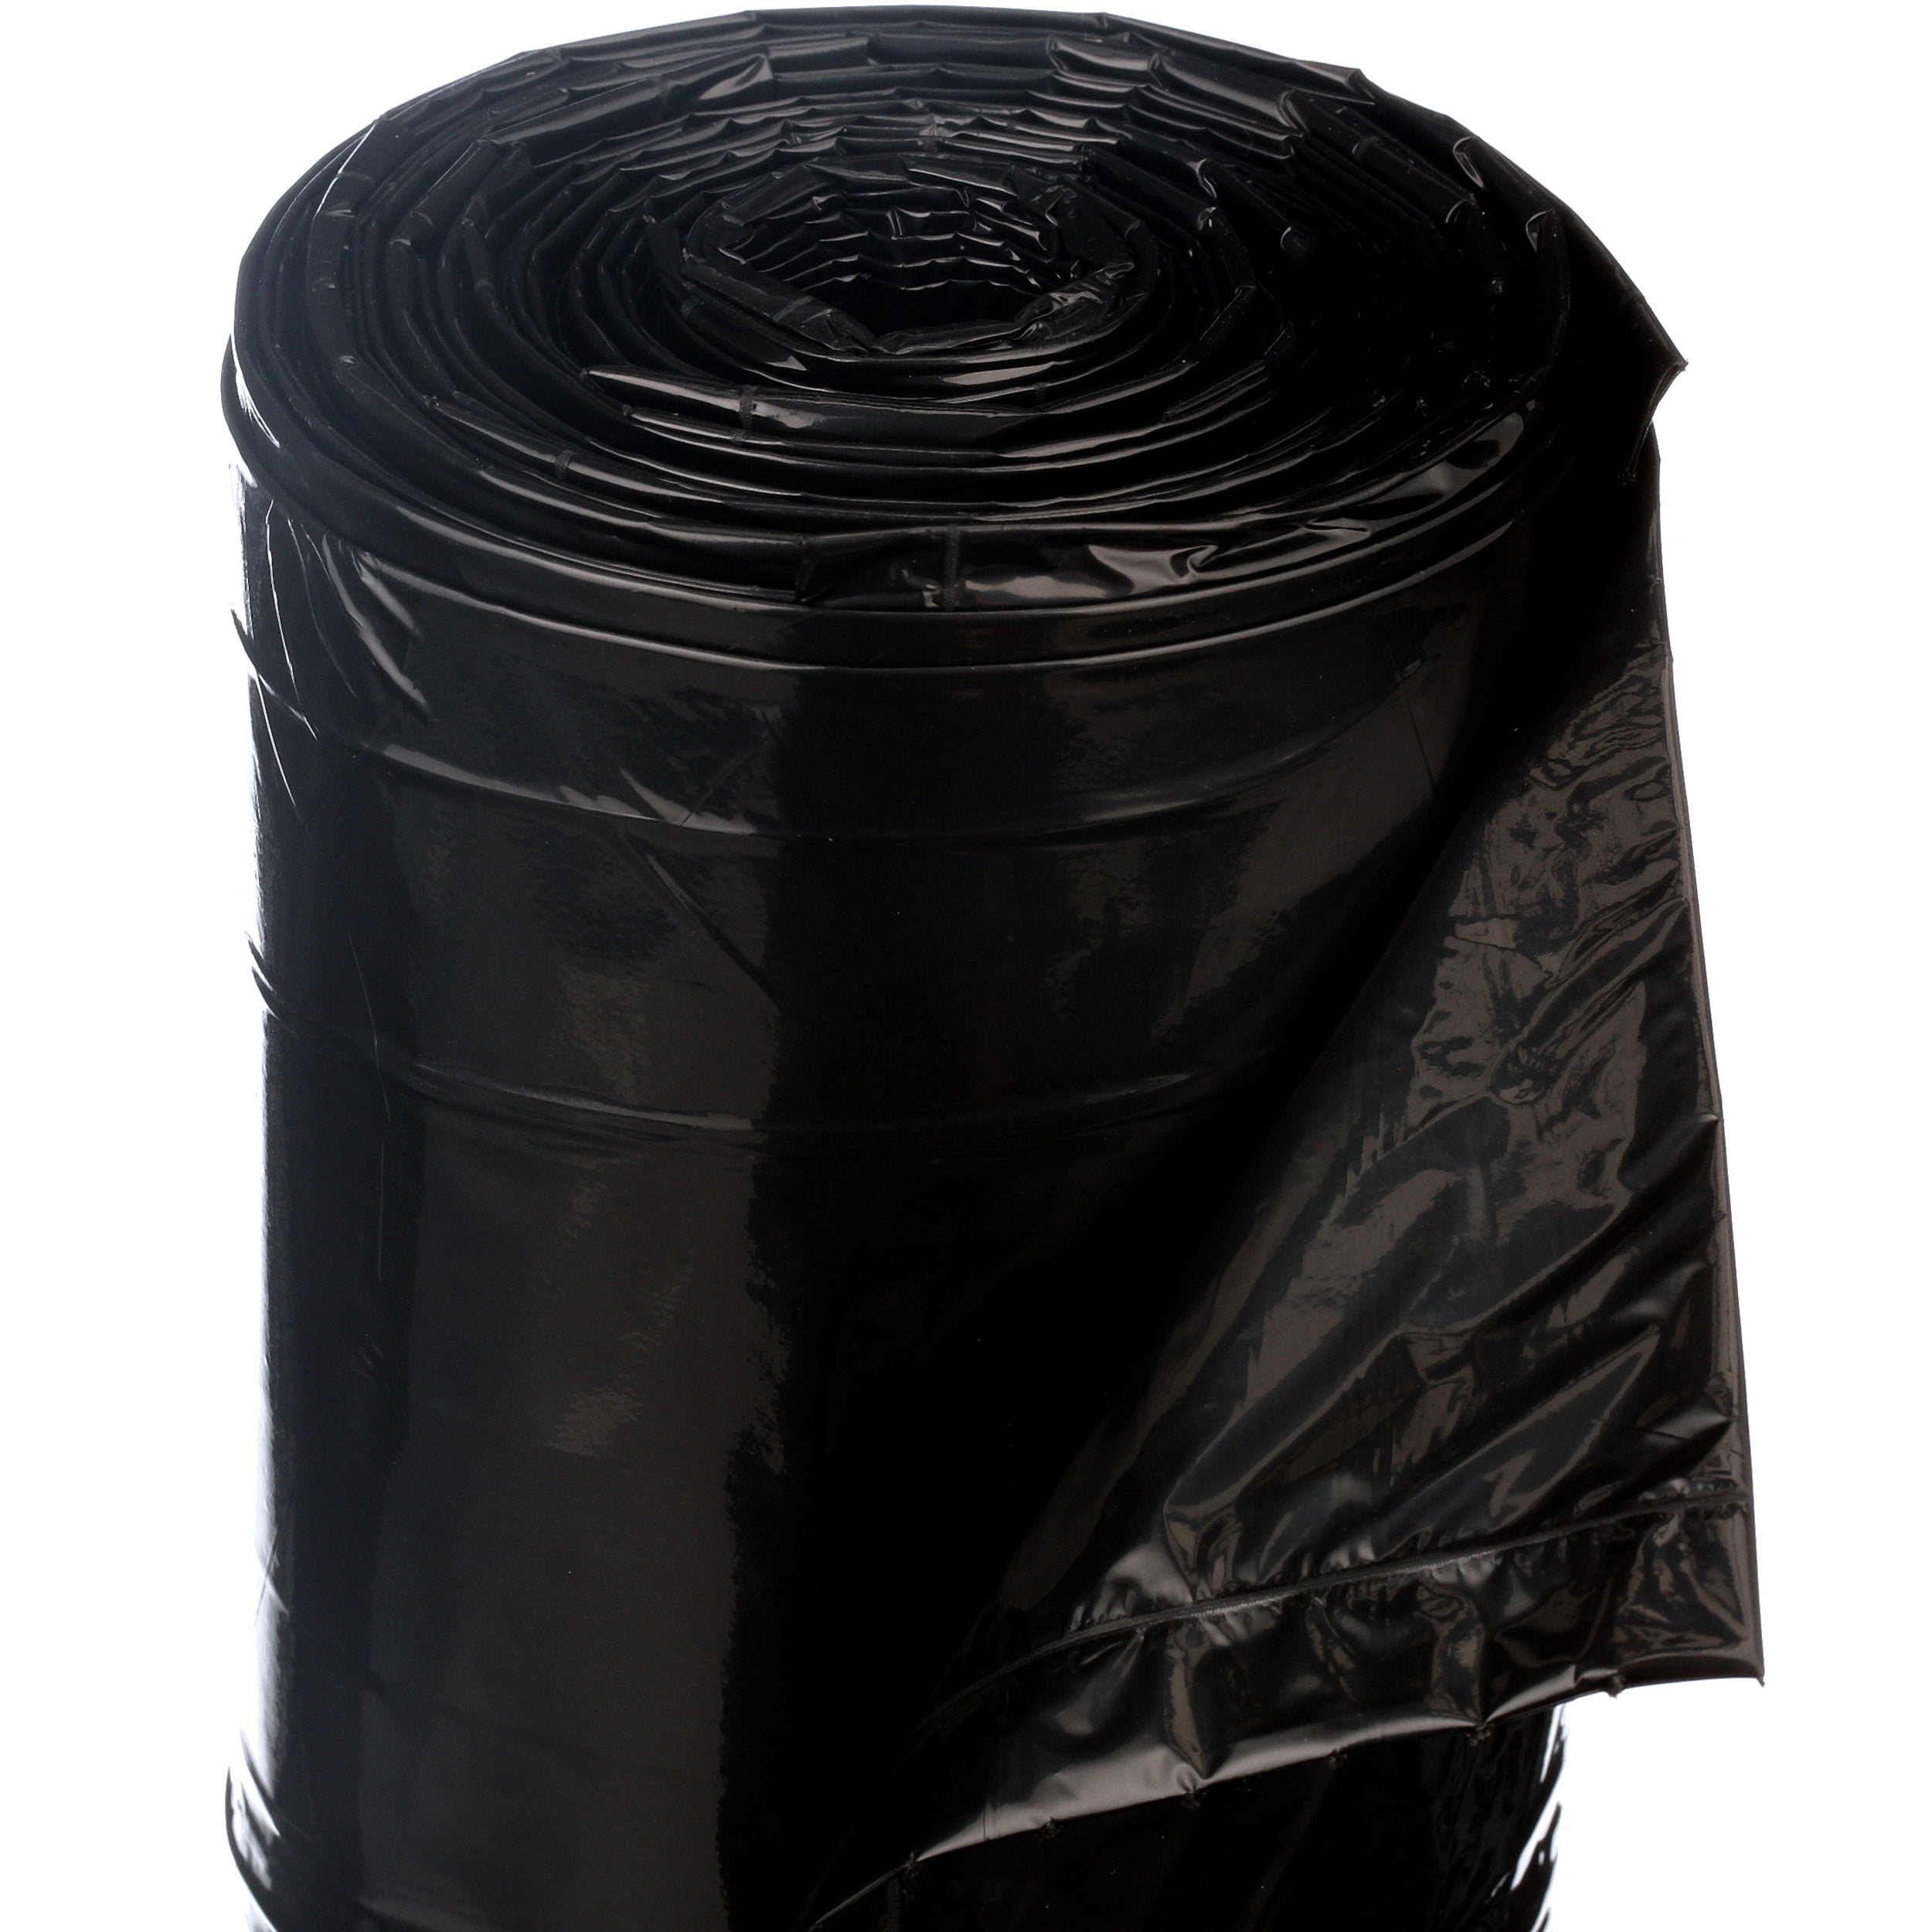 5 Rolls Drawstring Trash Bag / 2 Gallon Black Trash Bag / Garbage